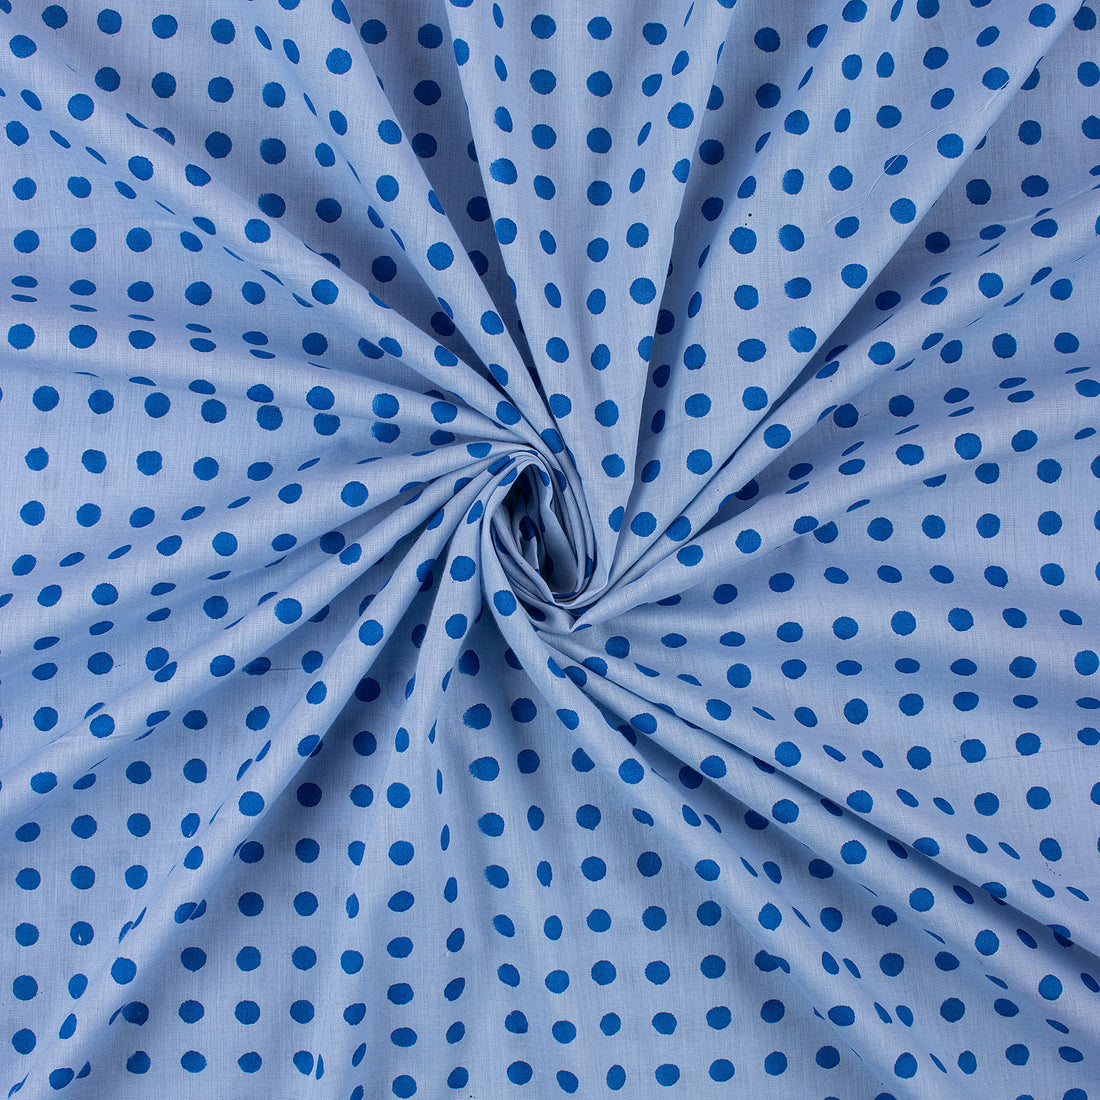 Blue Polka Dots Printed Cotton Fabric